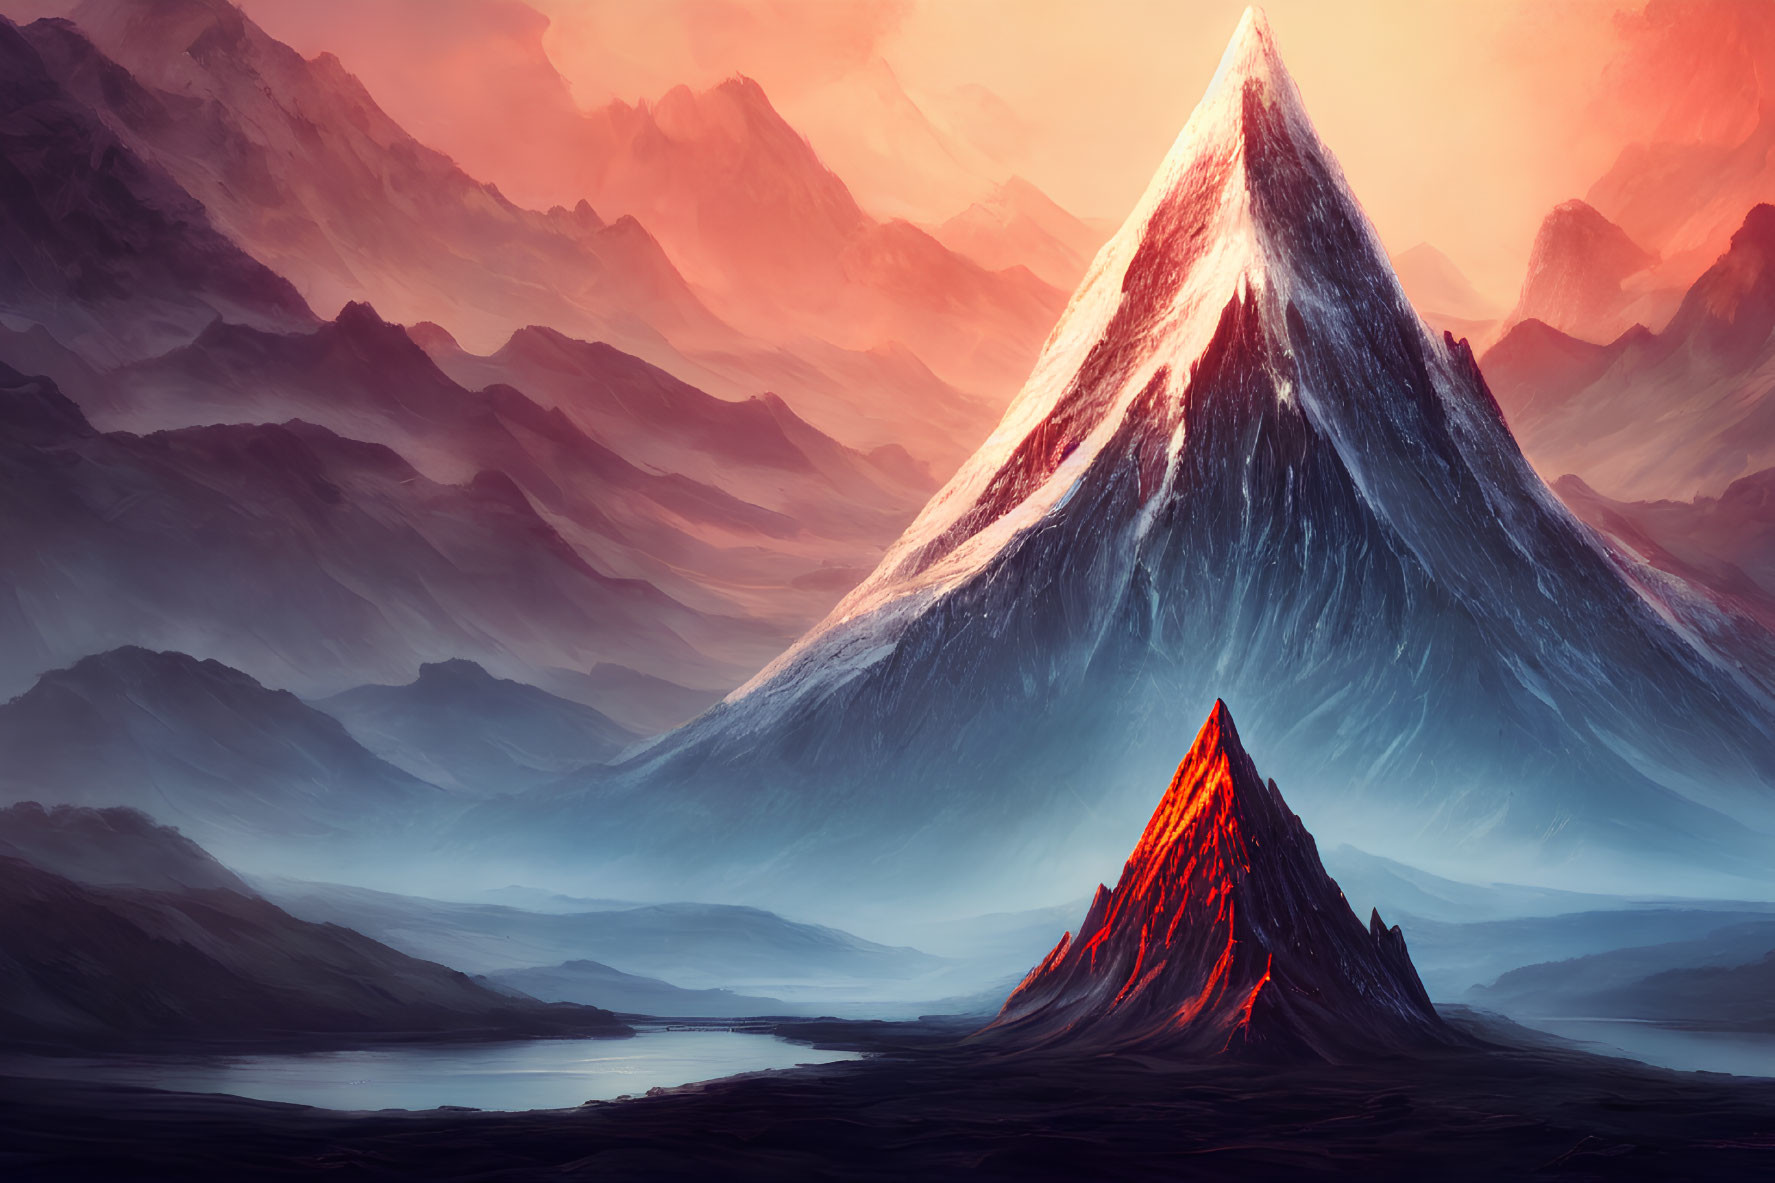 Majestic fiery mountain peak against dramatic red sky